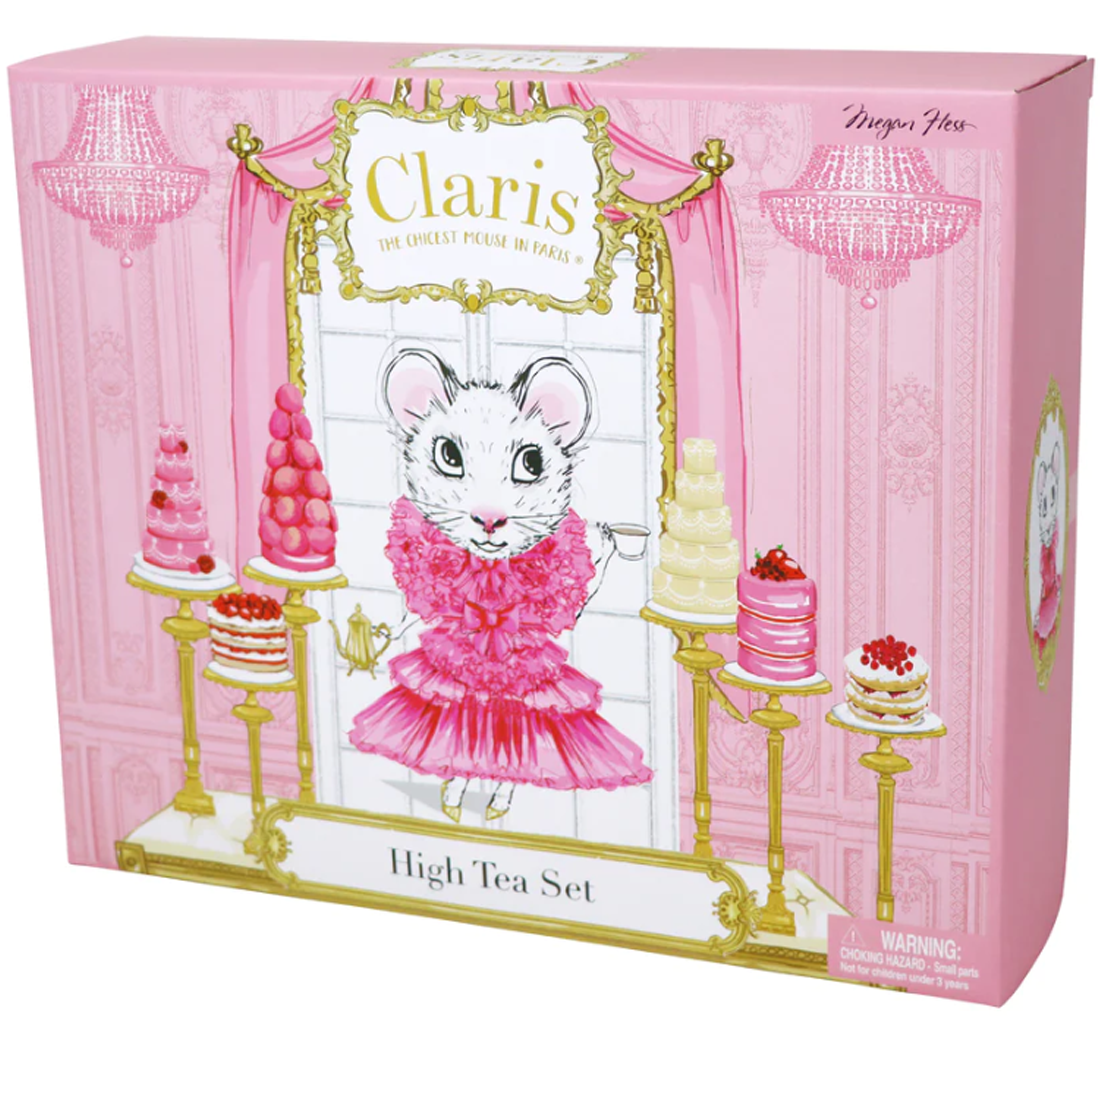 Claris - The Chicest Mouse in Paris High Tea Set